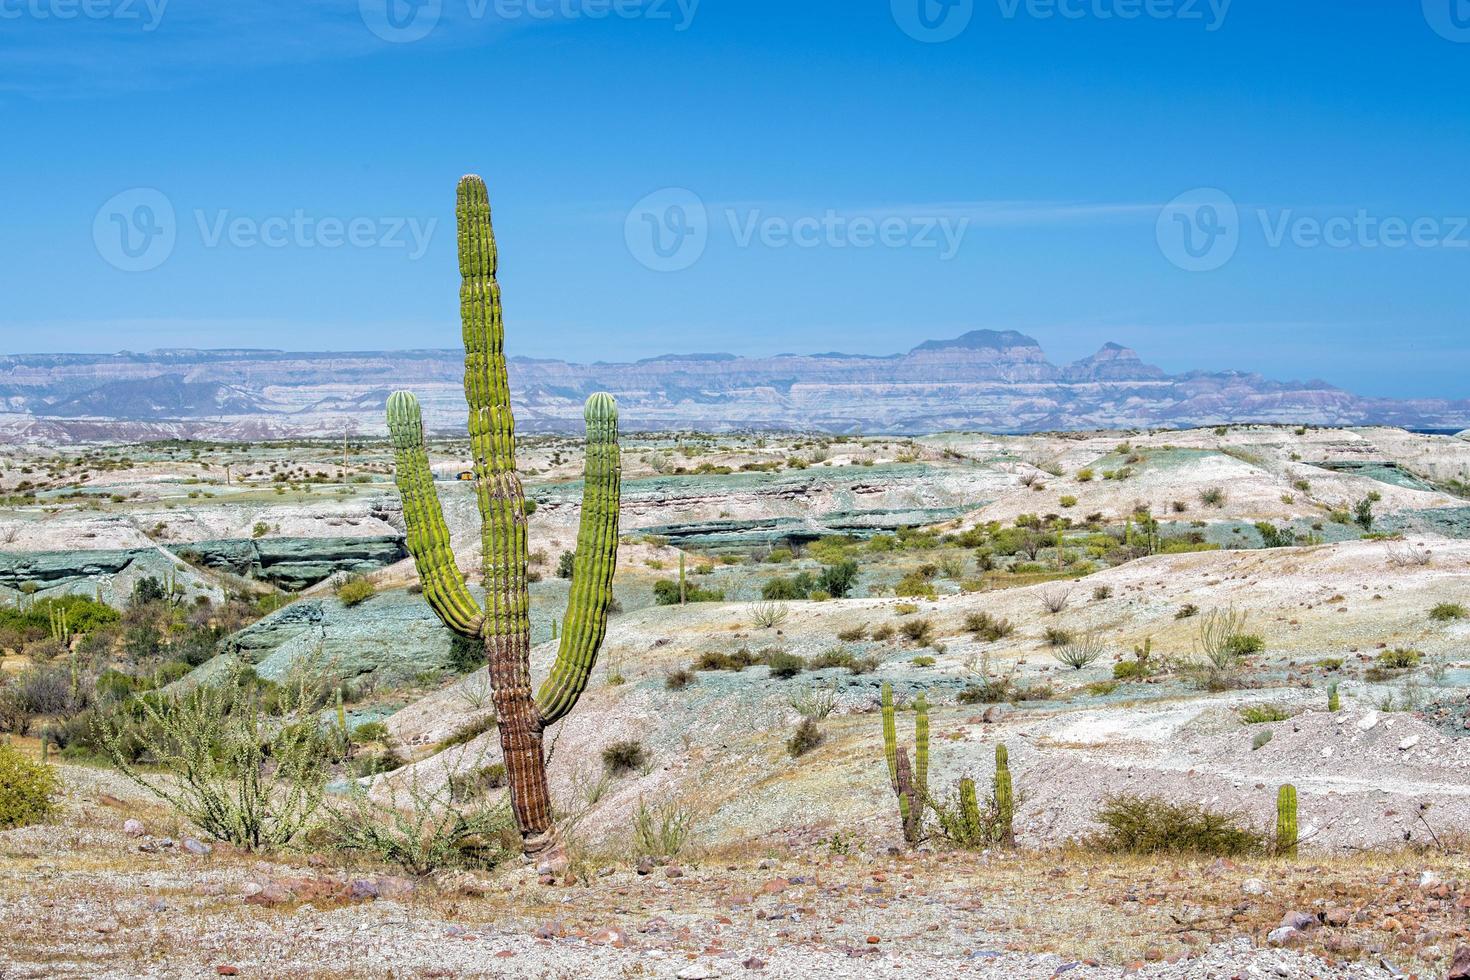 California gigante deserto cactus vicino su foto